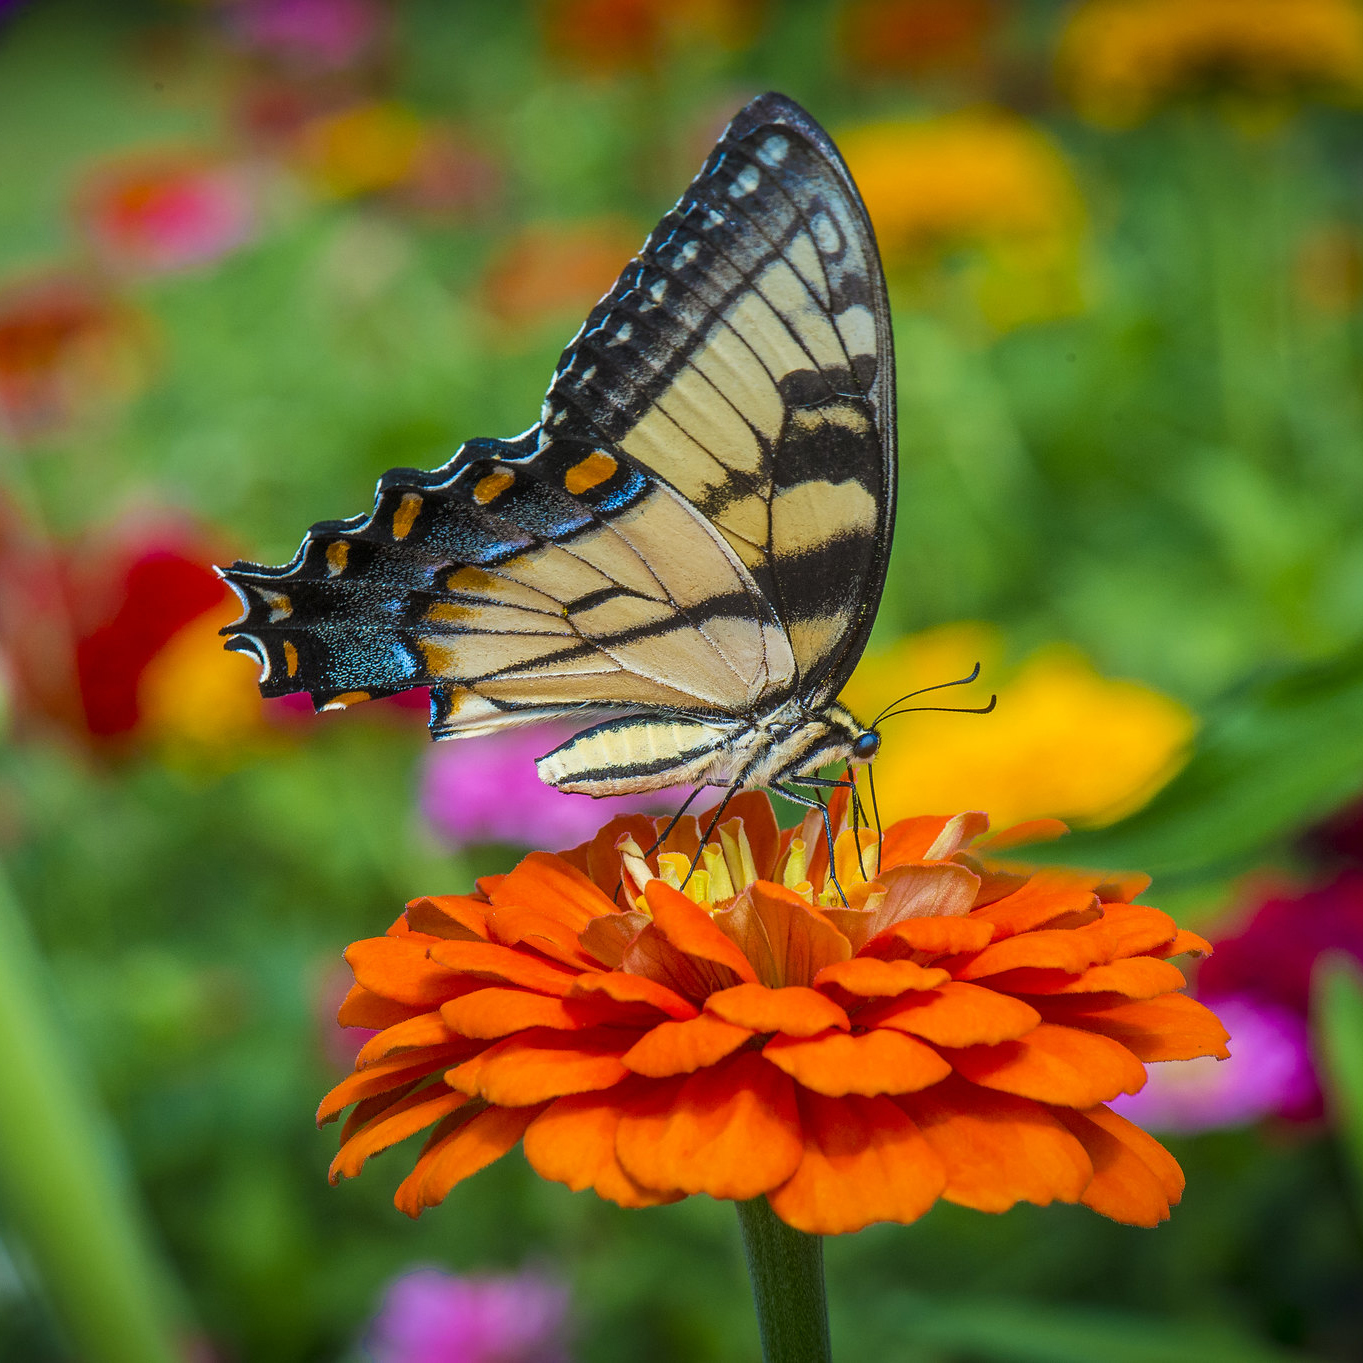 A butterfly sits on an orange flower